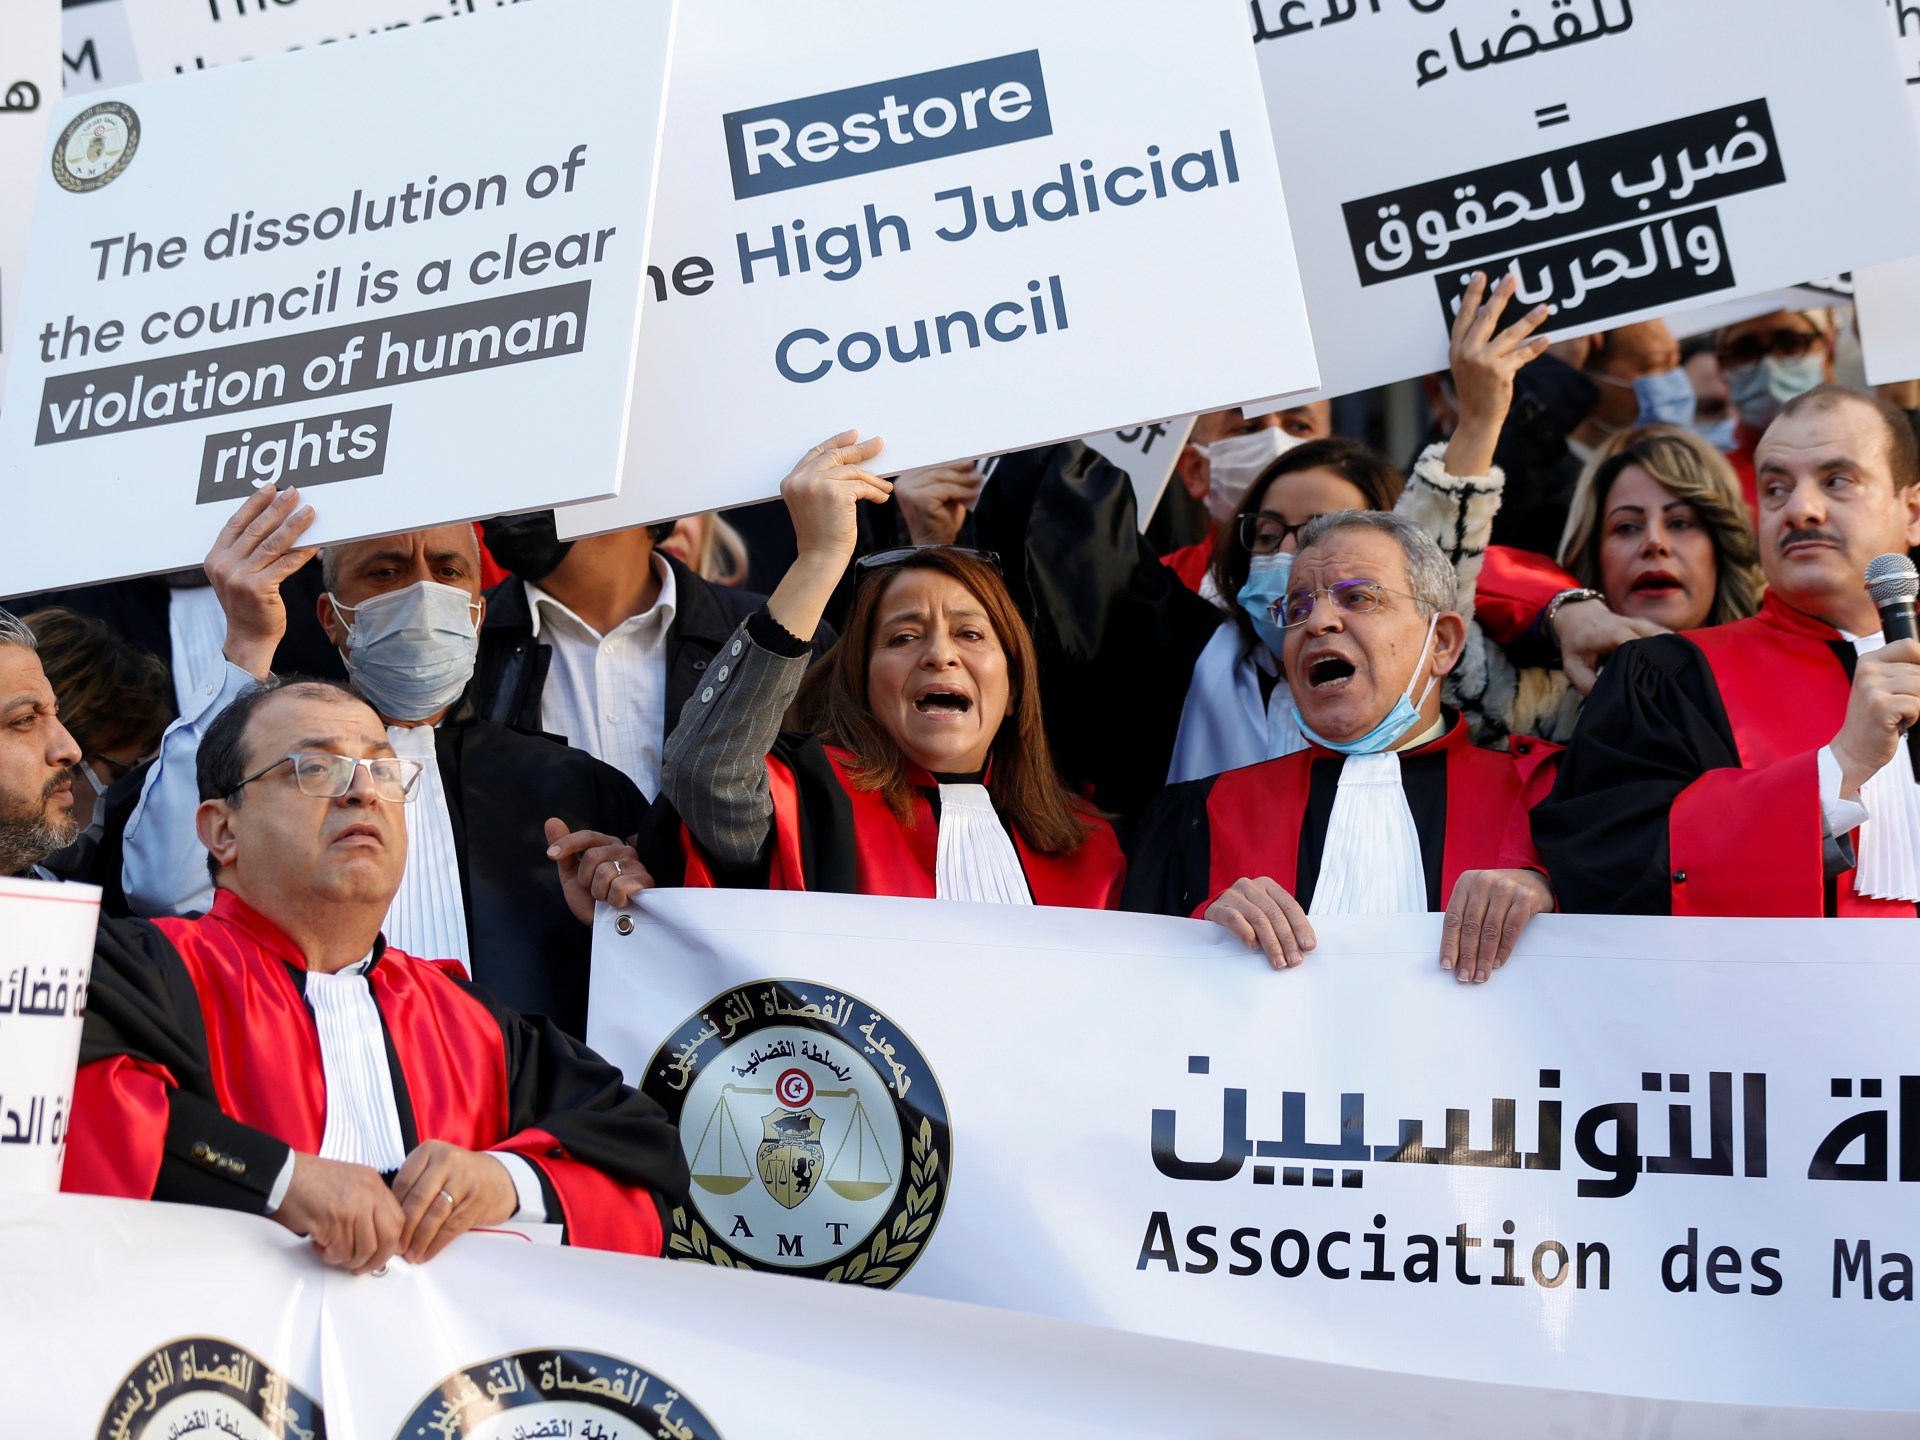 Human rights groups condemn attacks on Tunisia’s judiciary | Human Rights News